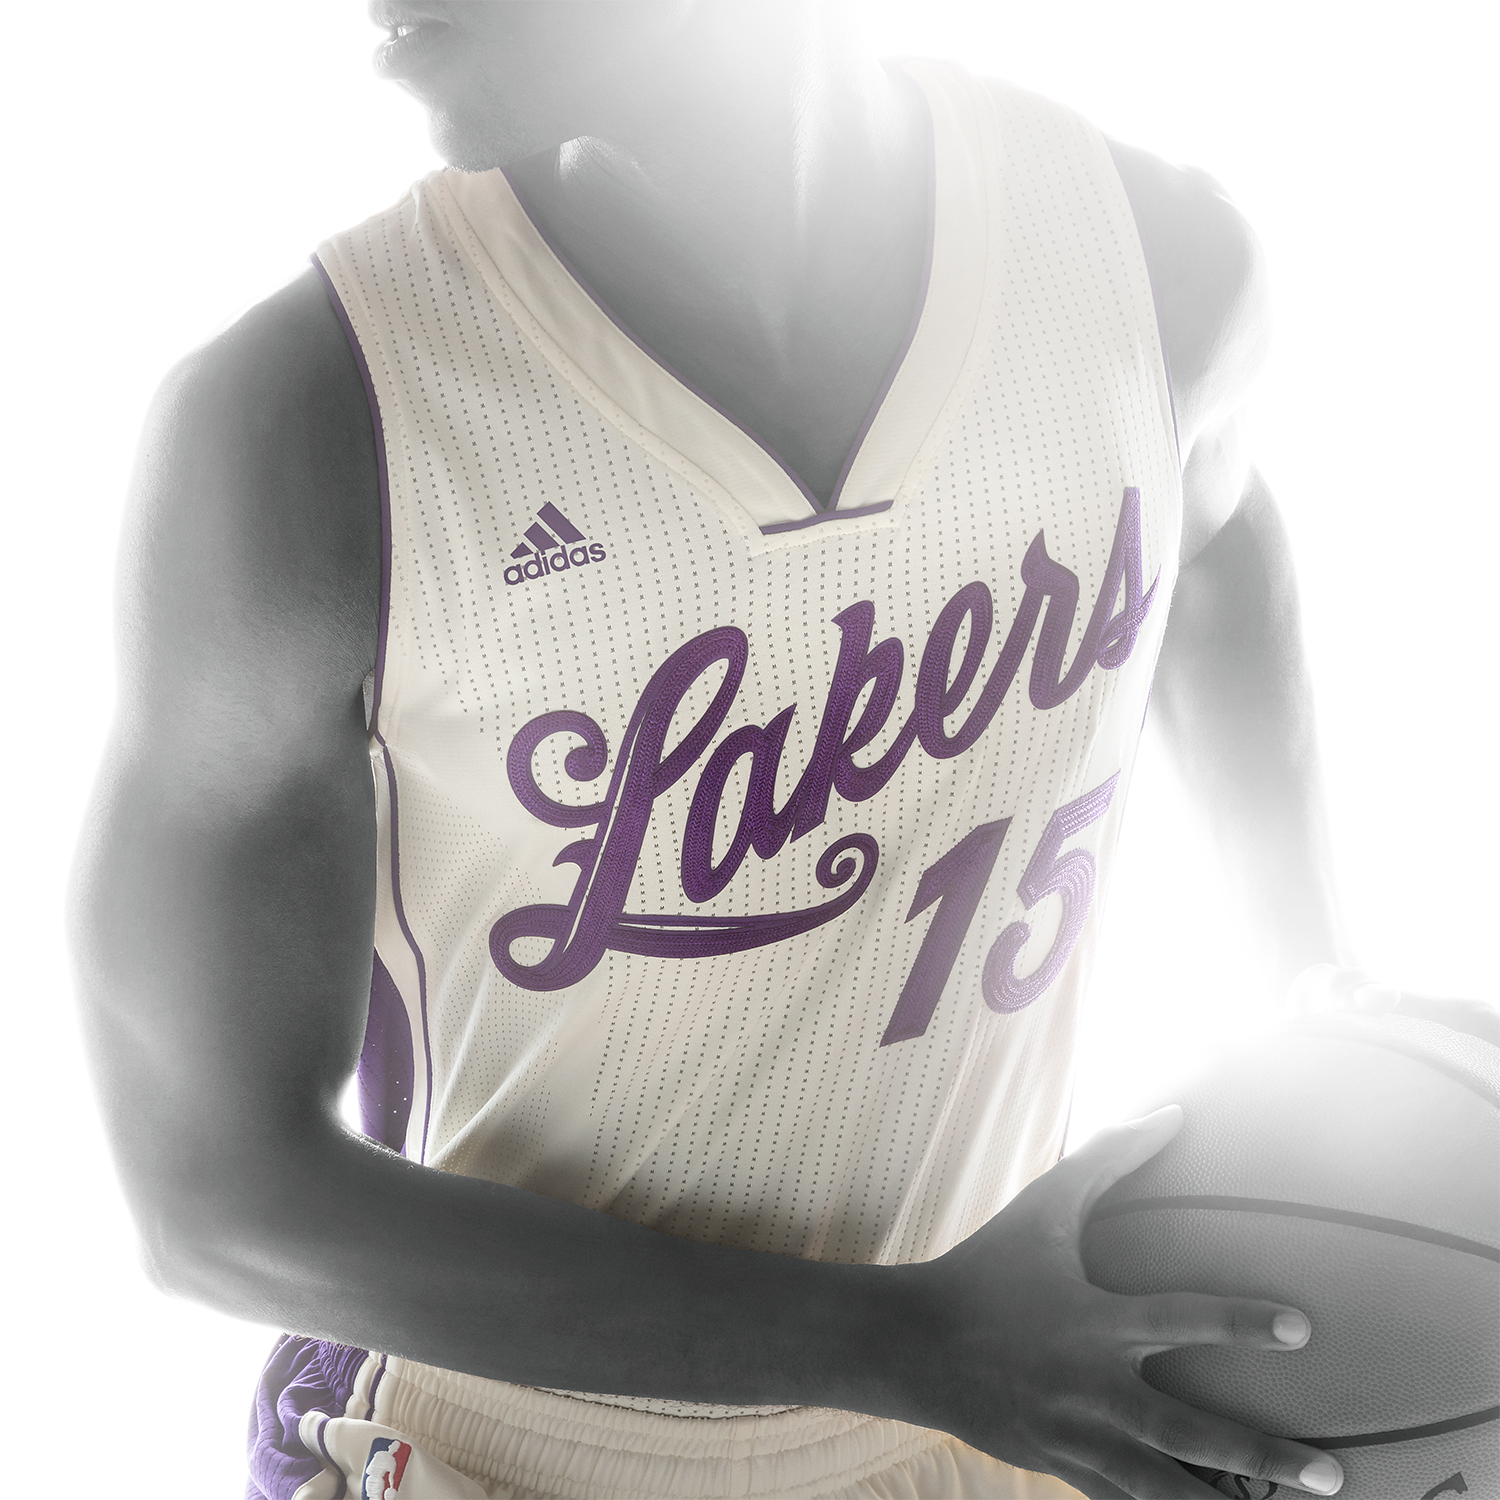 NBA Unveil Uniforms for 2015 NBA Christmas Day Games